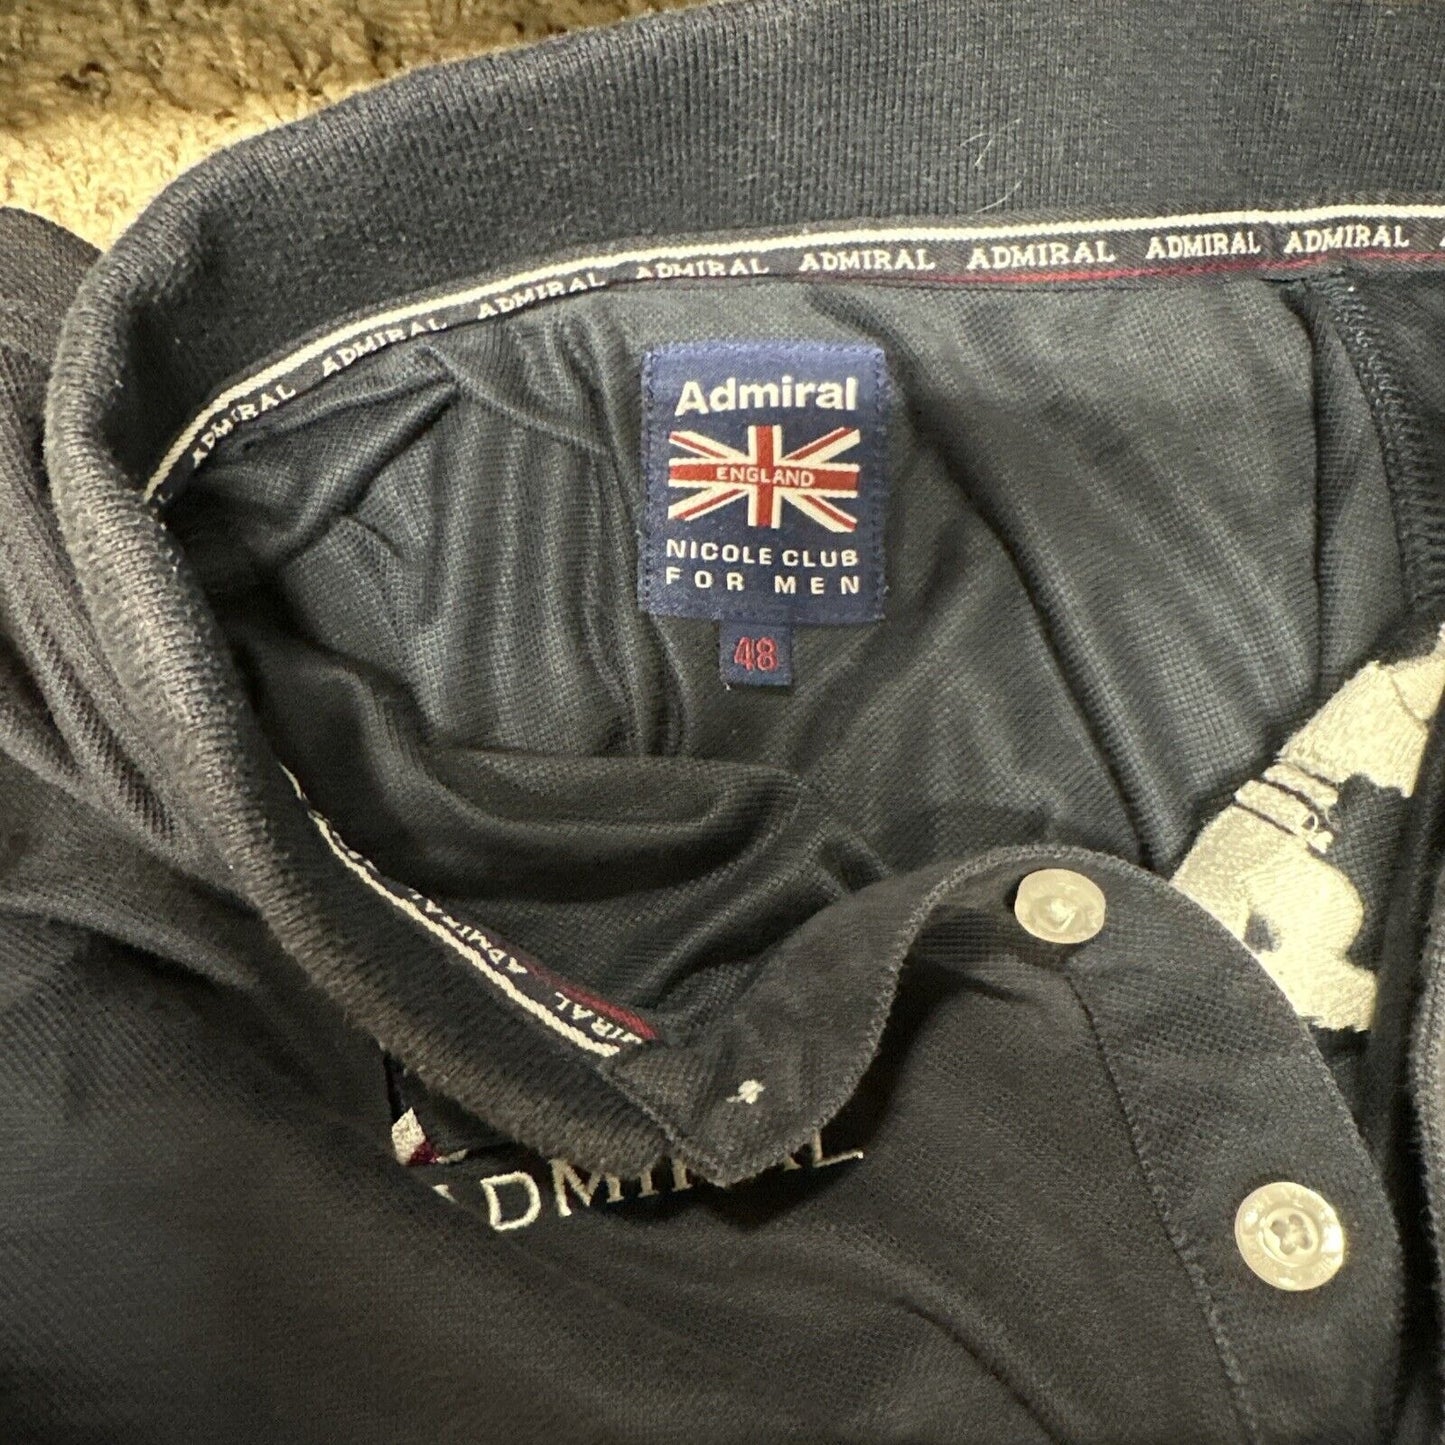 Men’s Dark Blue Admiral England 48 Nicole Club For Men Polo Shirt